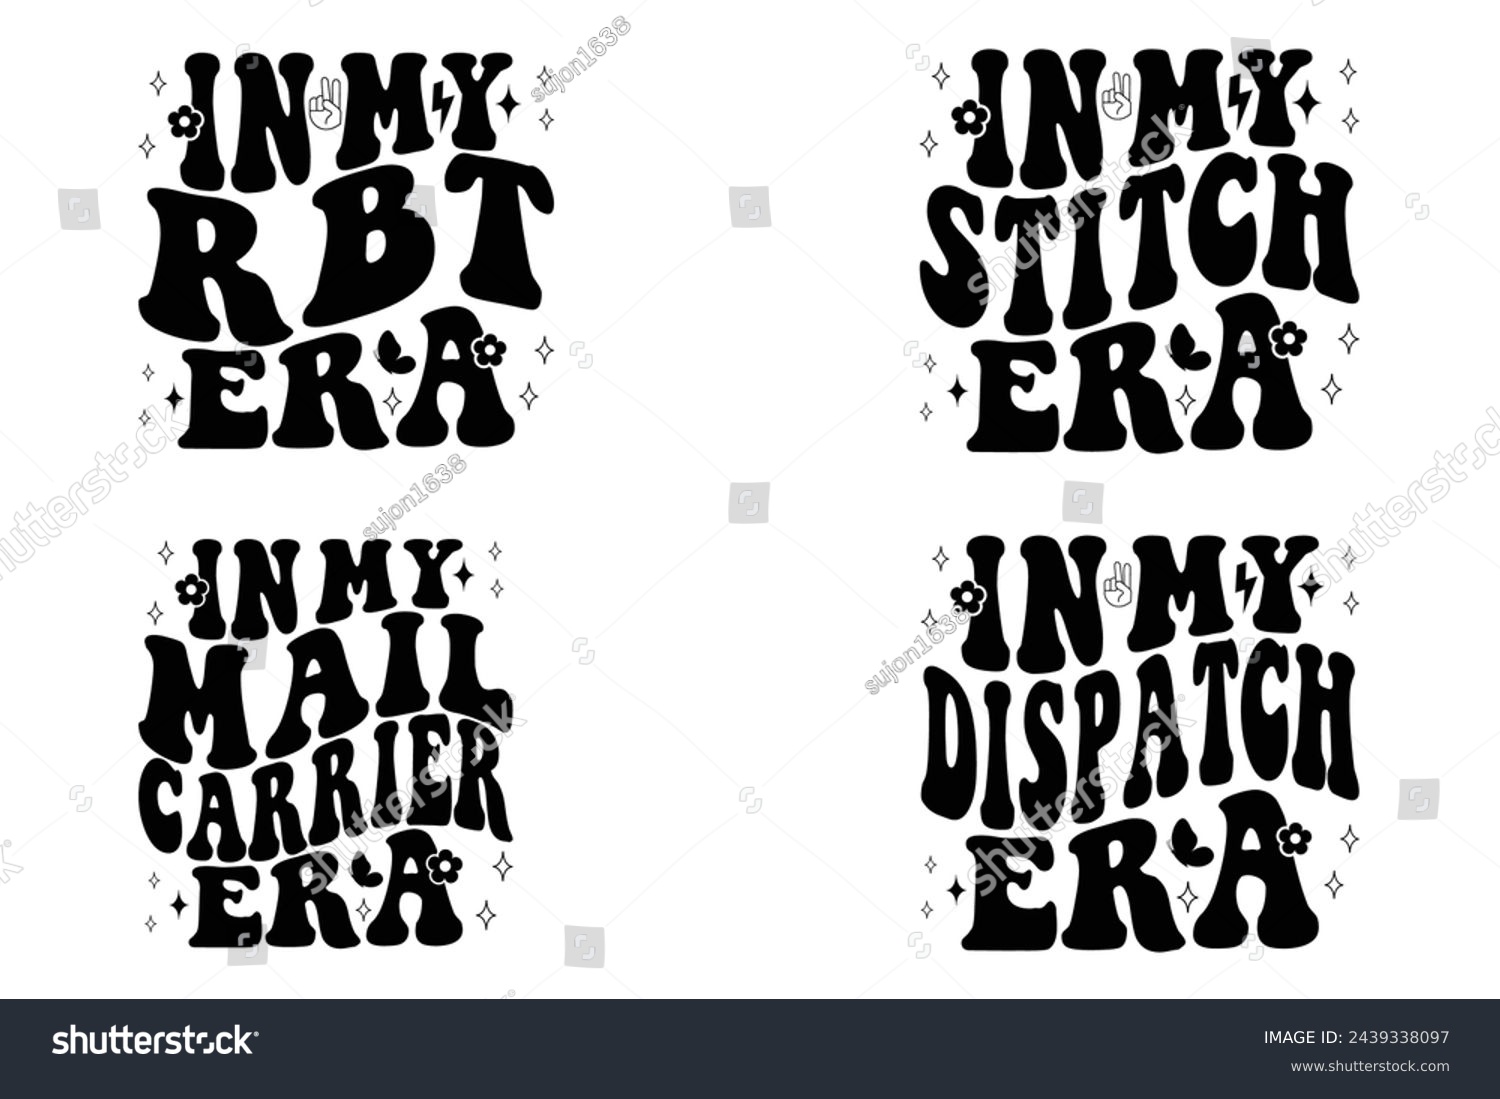 SVG of In My RBT Era, In My Stitch Era, In My Mail Carrier Era, In My Dispatch Era retro T-shirt svg